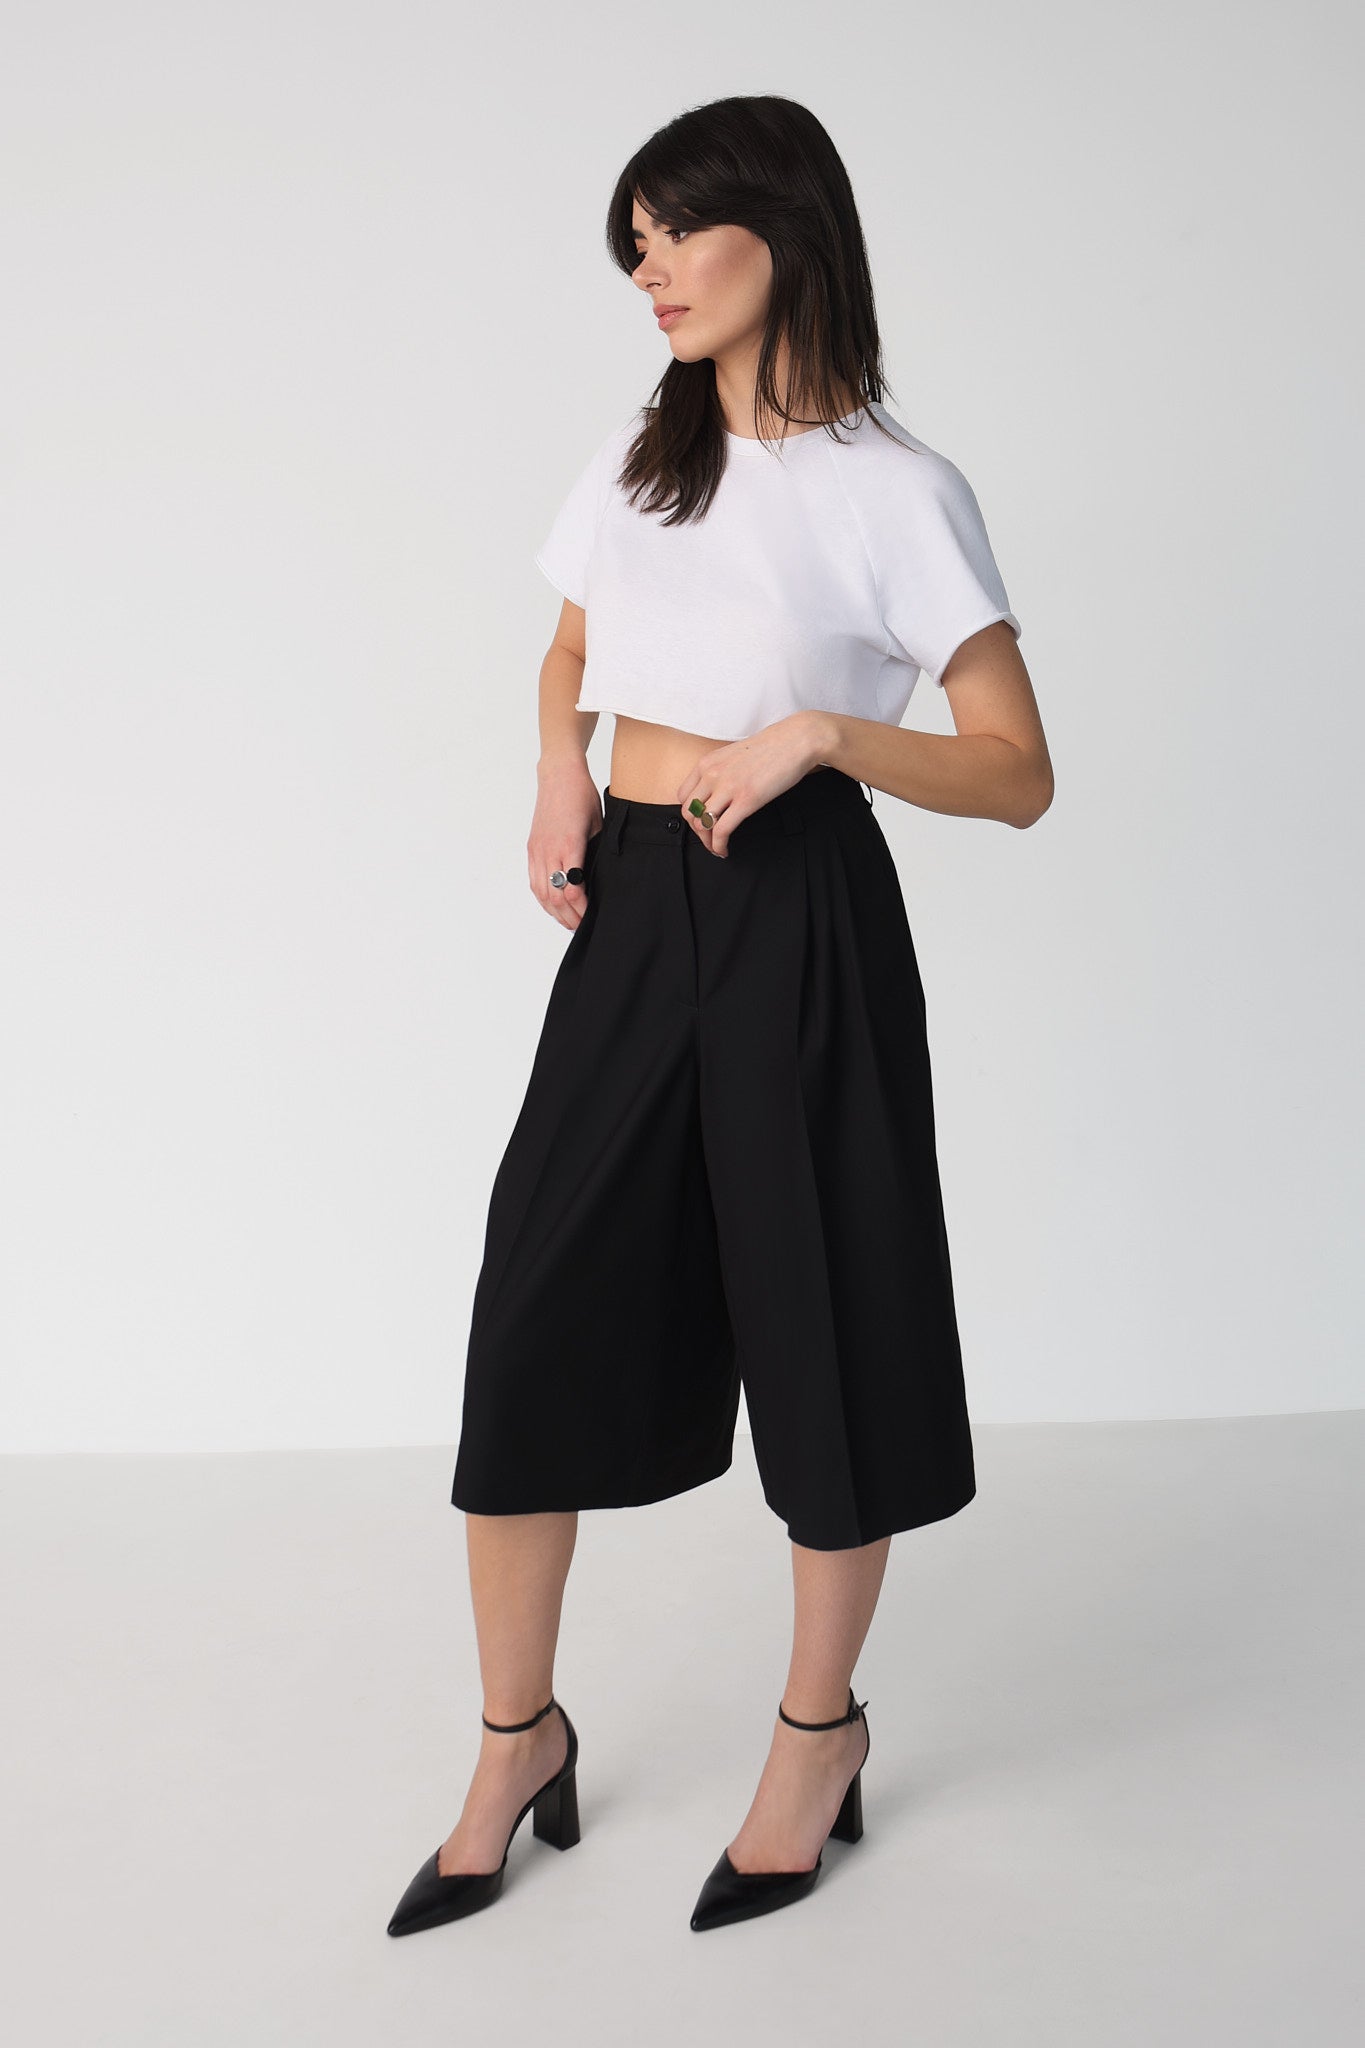 High waist culottes in black